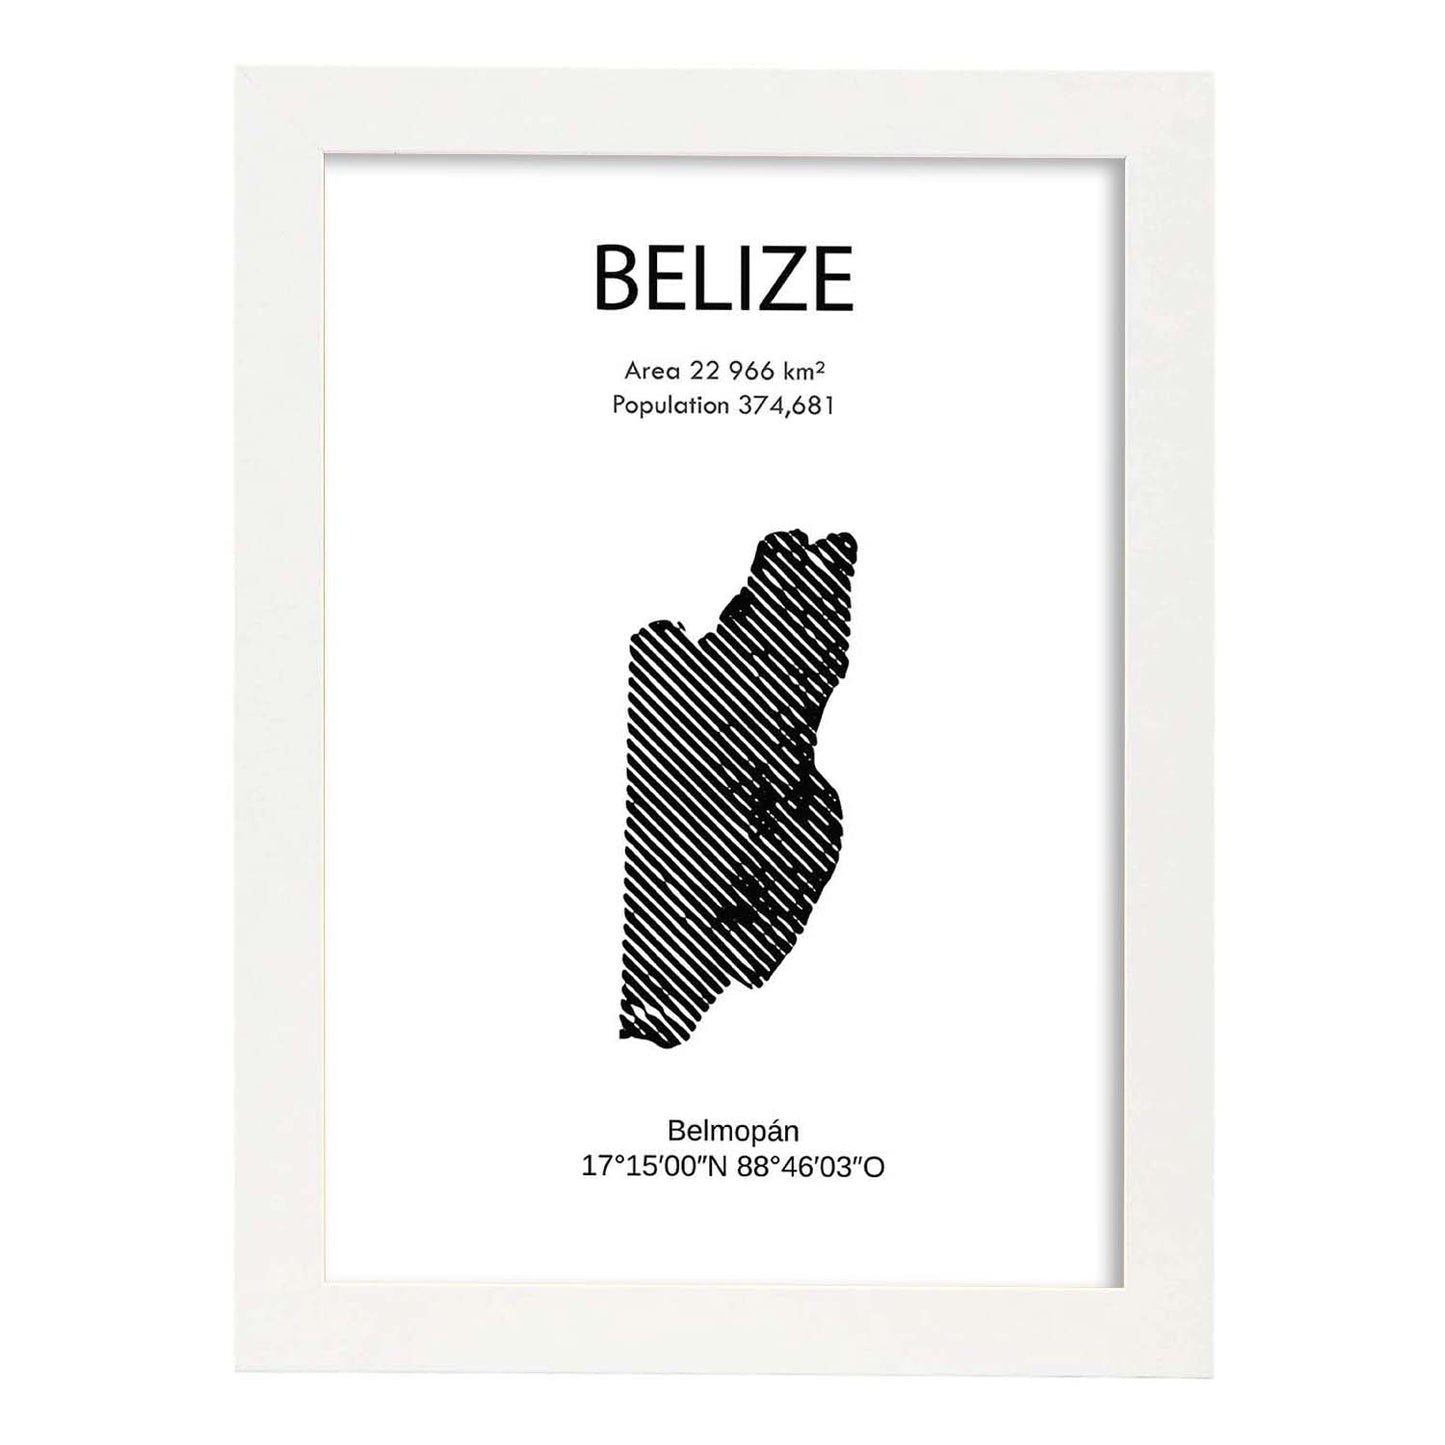 Poster de Belize. Láminas de paises y continentes del mundo.-Artwork-Nacnic-A4-Marco Blanco-Nacnic Estudio SL